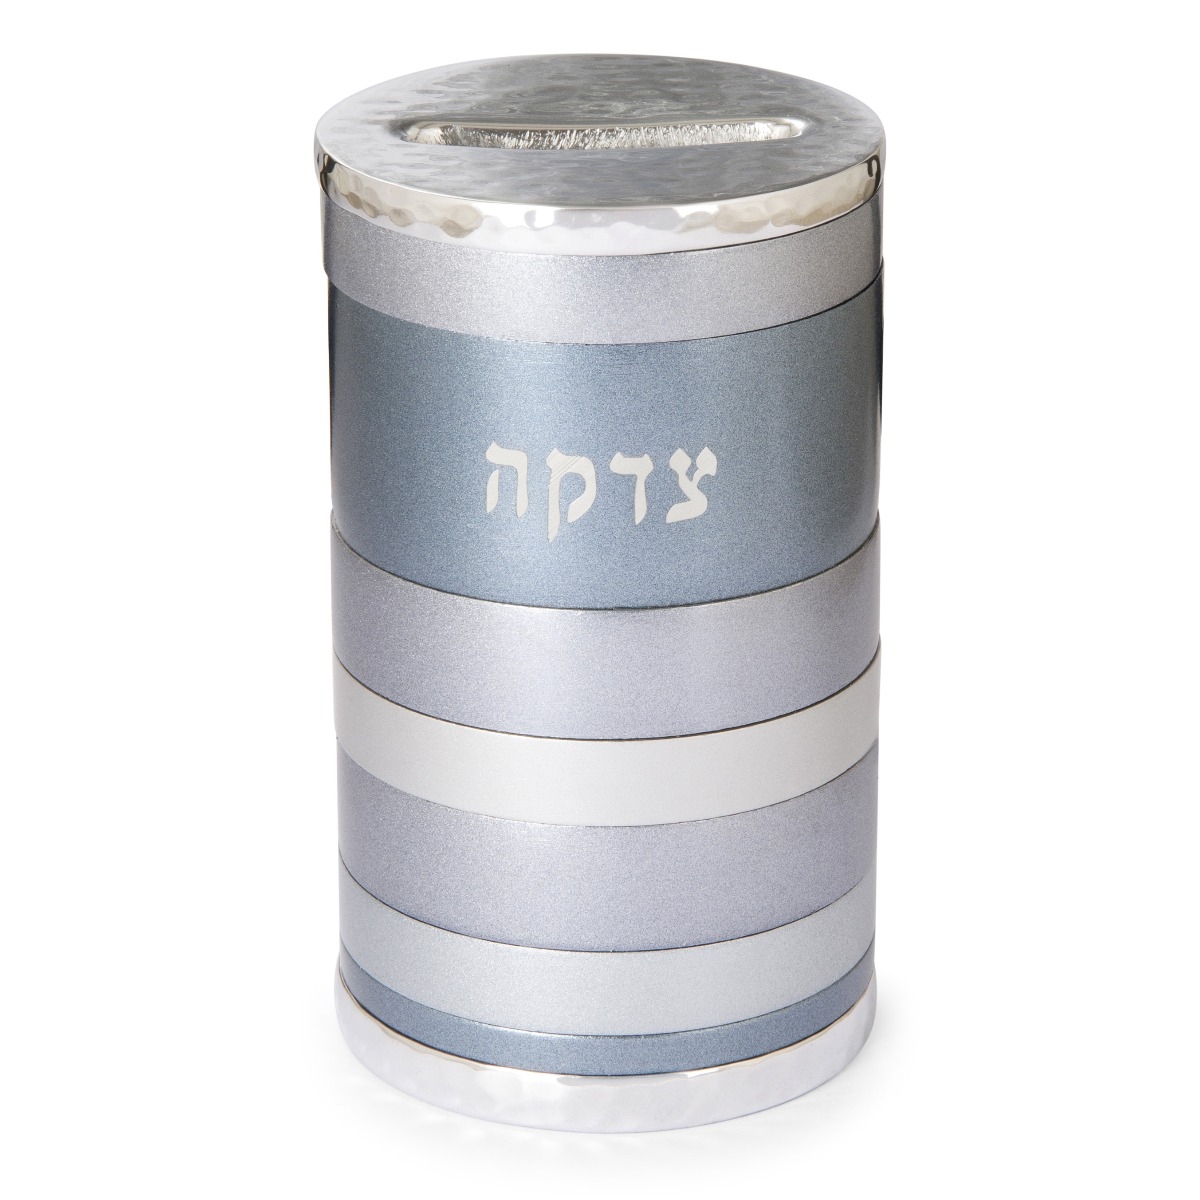 Yair Emanuel Anodized Aluminum Tzedakah (Charity) Box  - 1